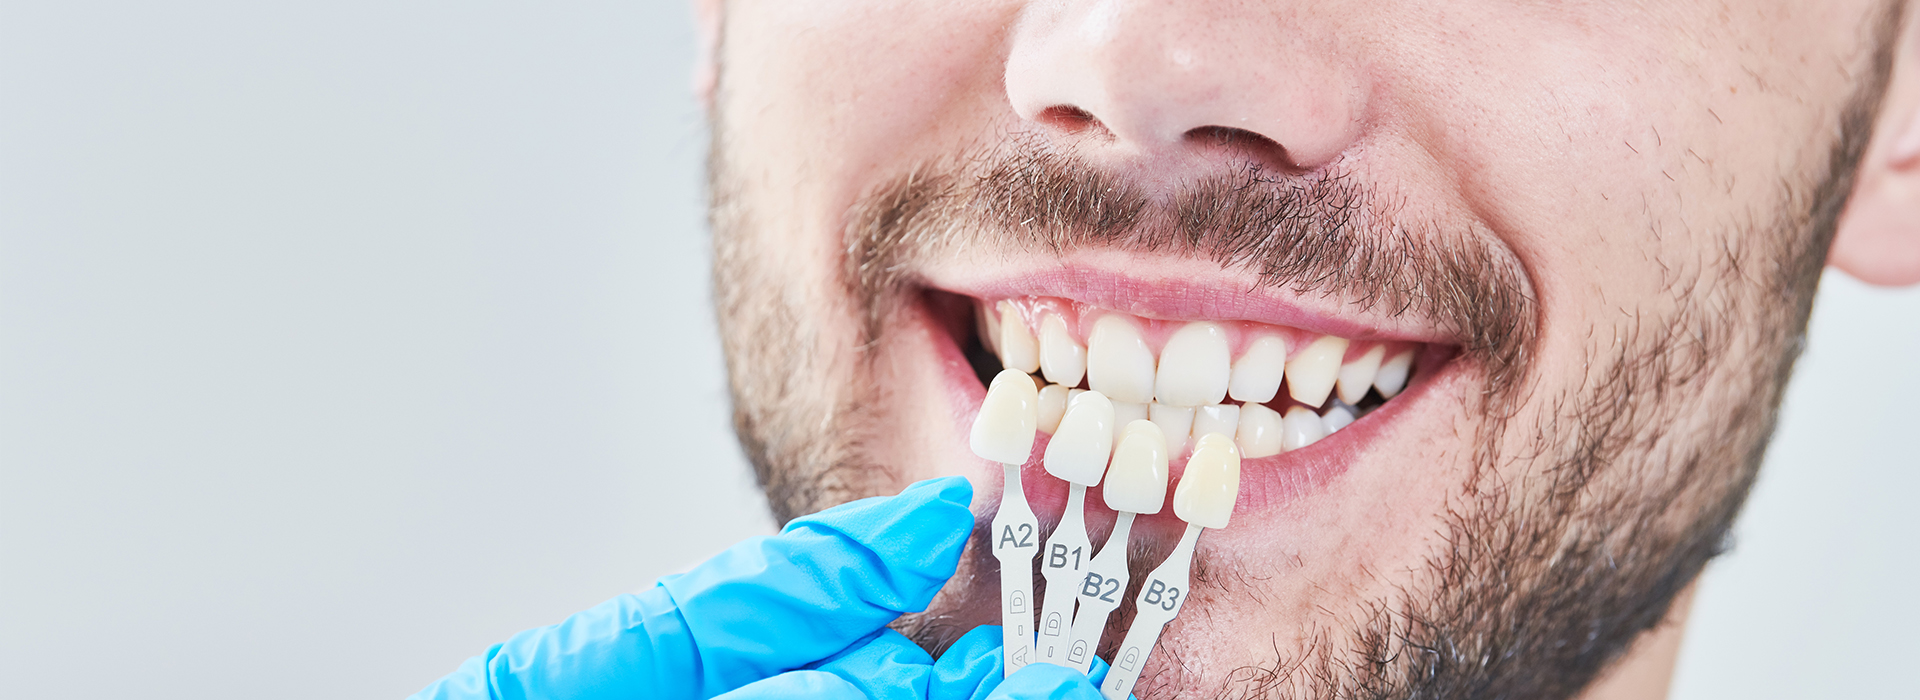 Glowing Smile Dental Studio | Dental Fillings, Oral Cancer Screening and Implant Restorations